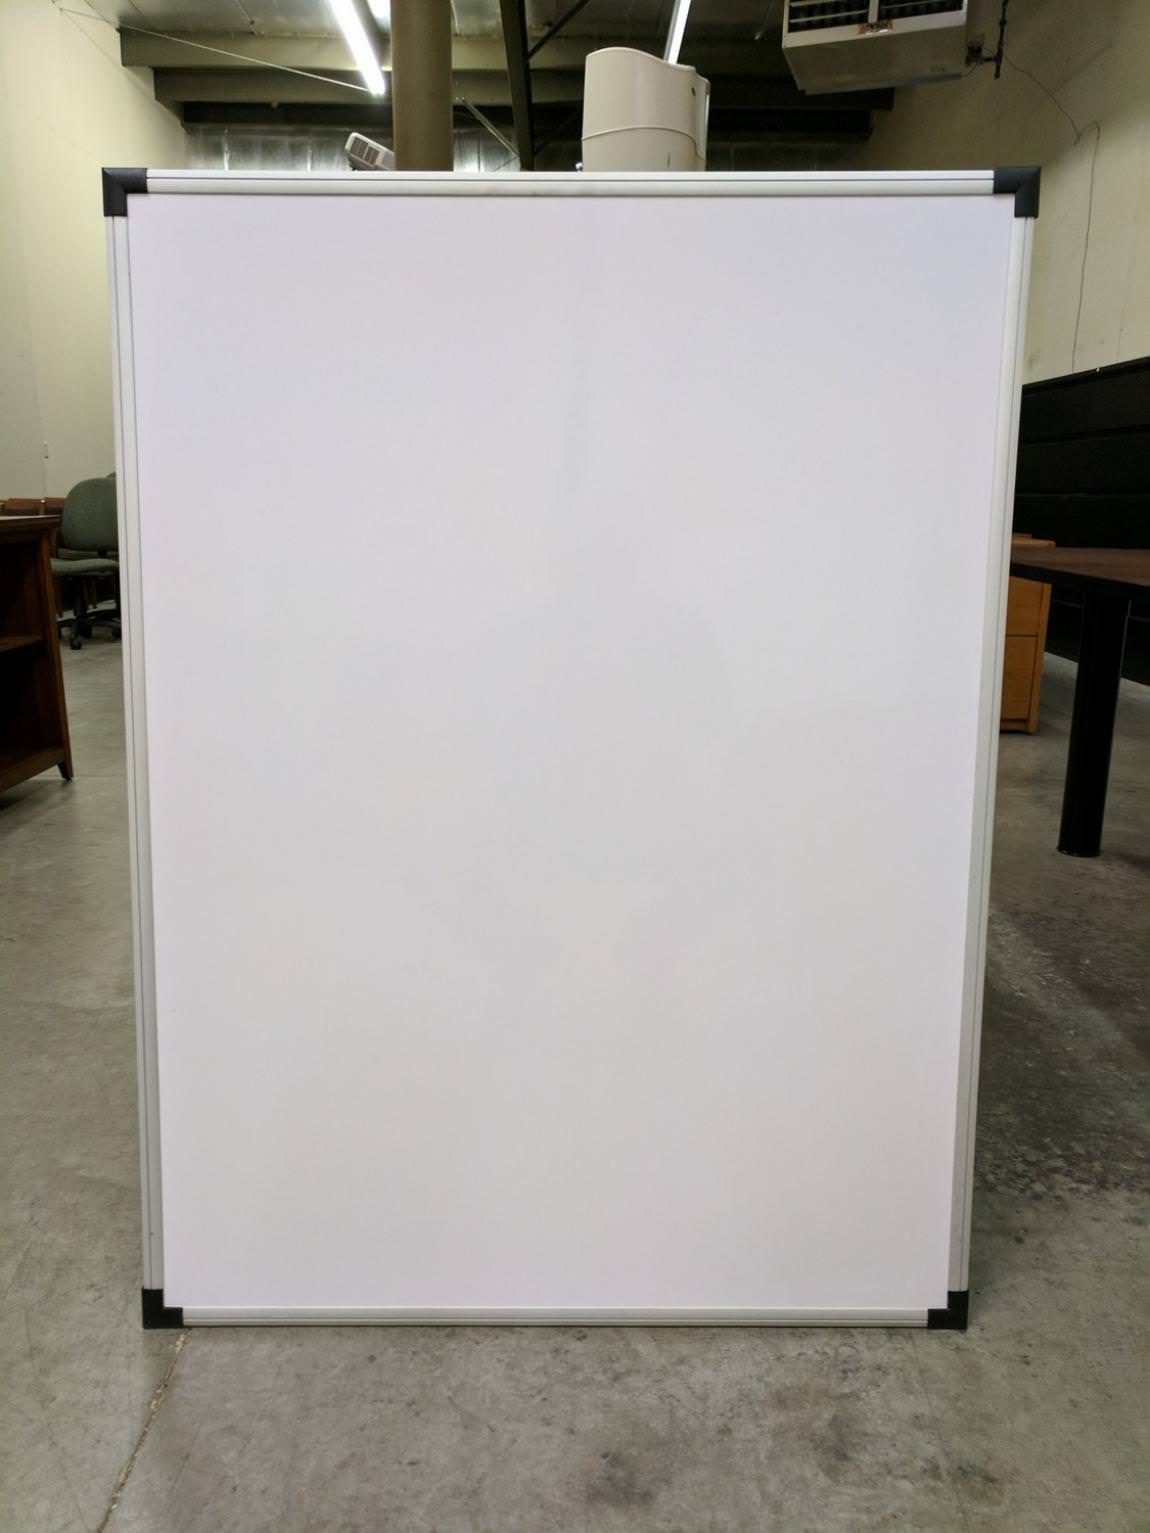 48x36 Universal Dry Erase Whiteboard